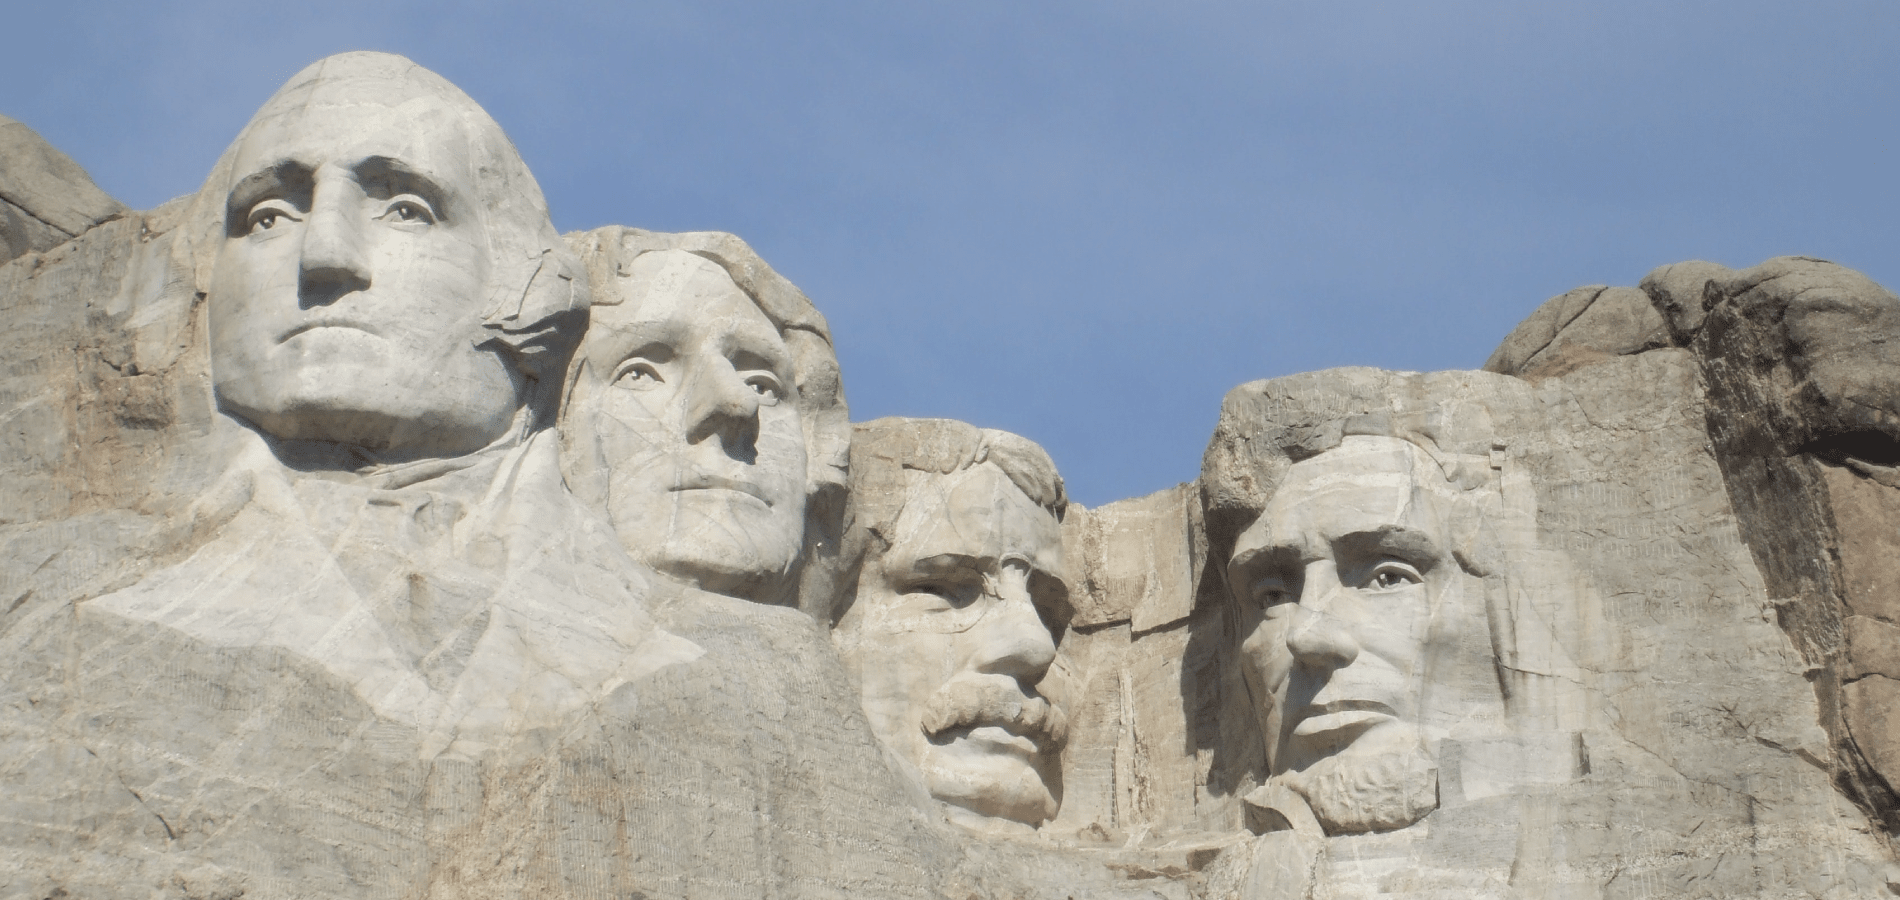 image of Mount Rushmore